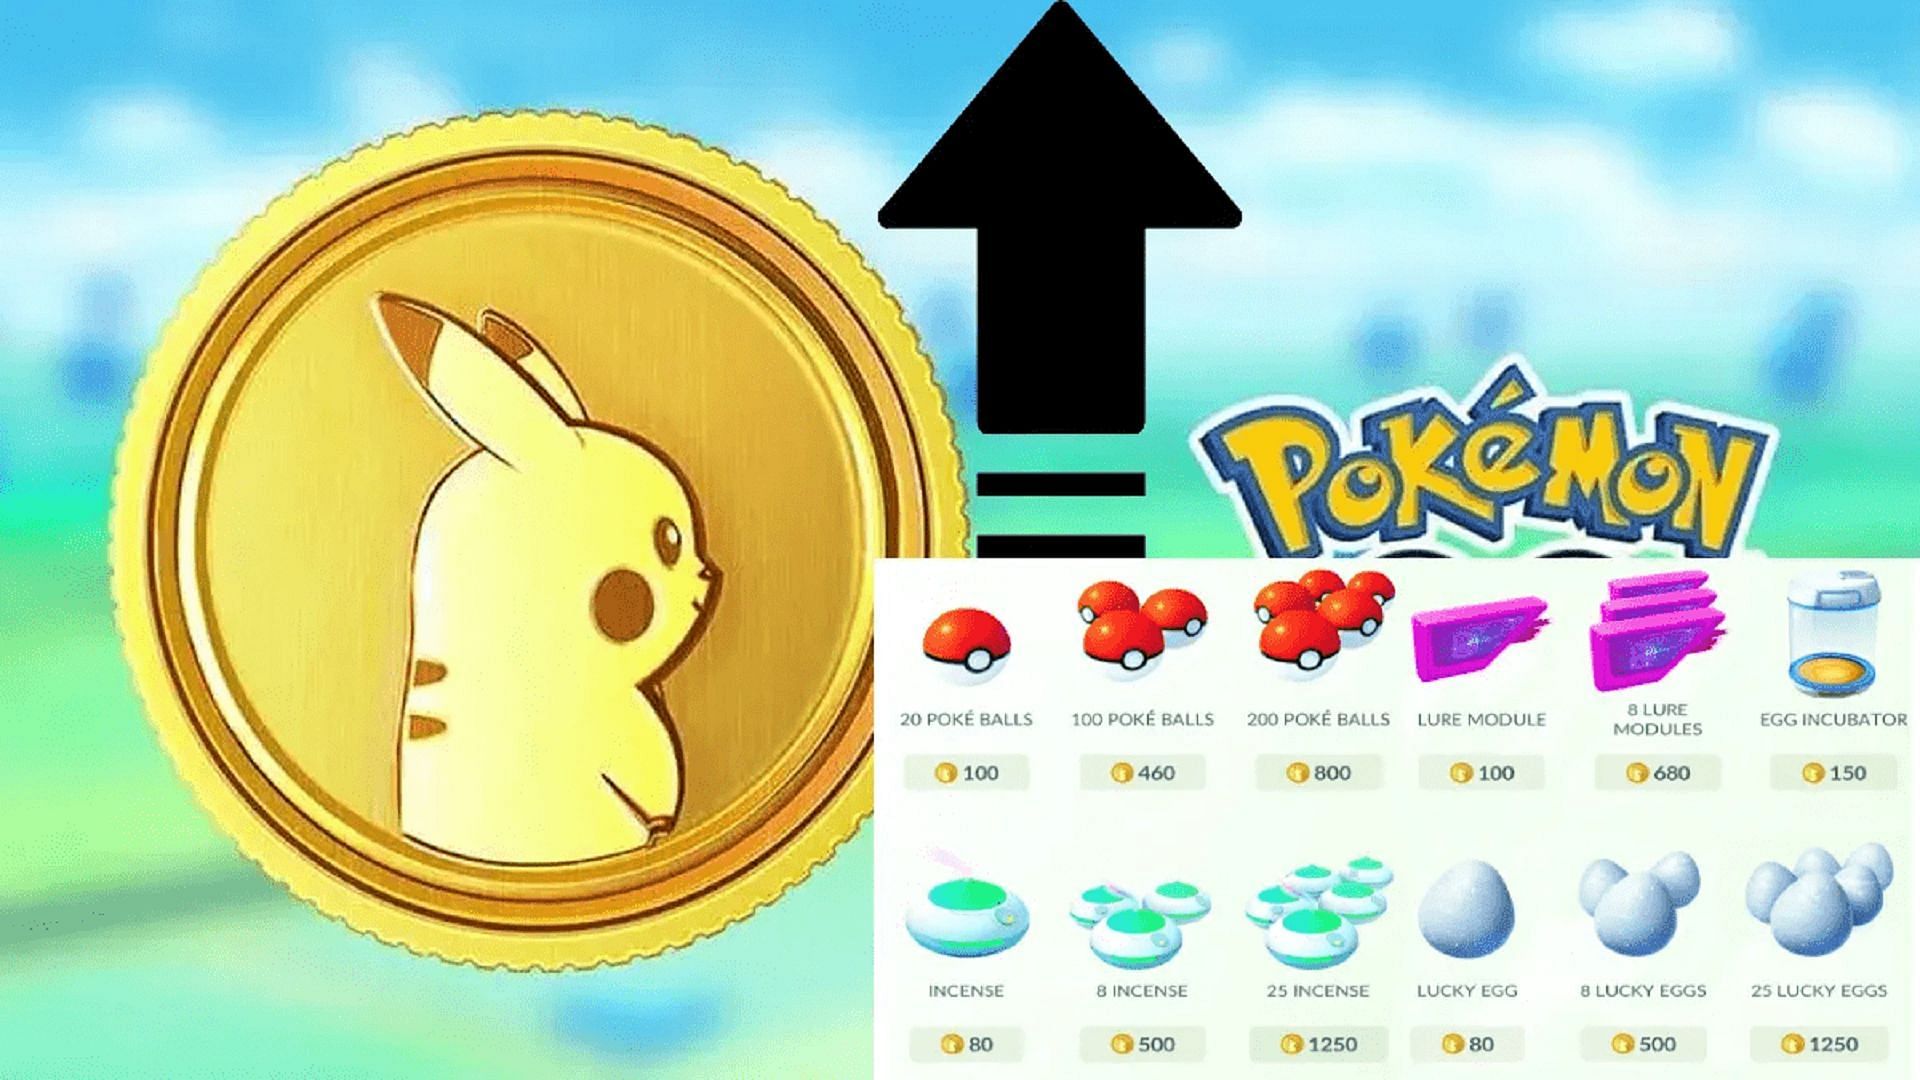 Niantic's Pokemon GO store coin pricing makes little sense